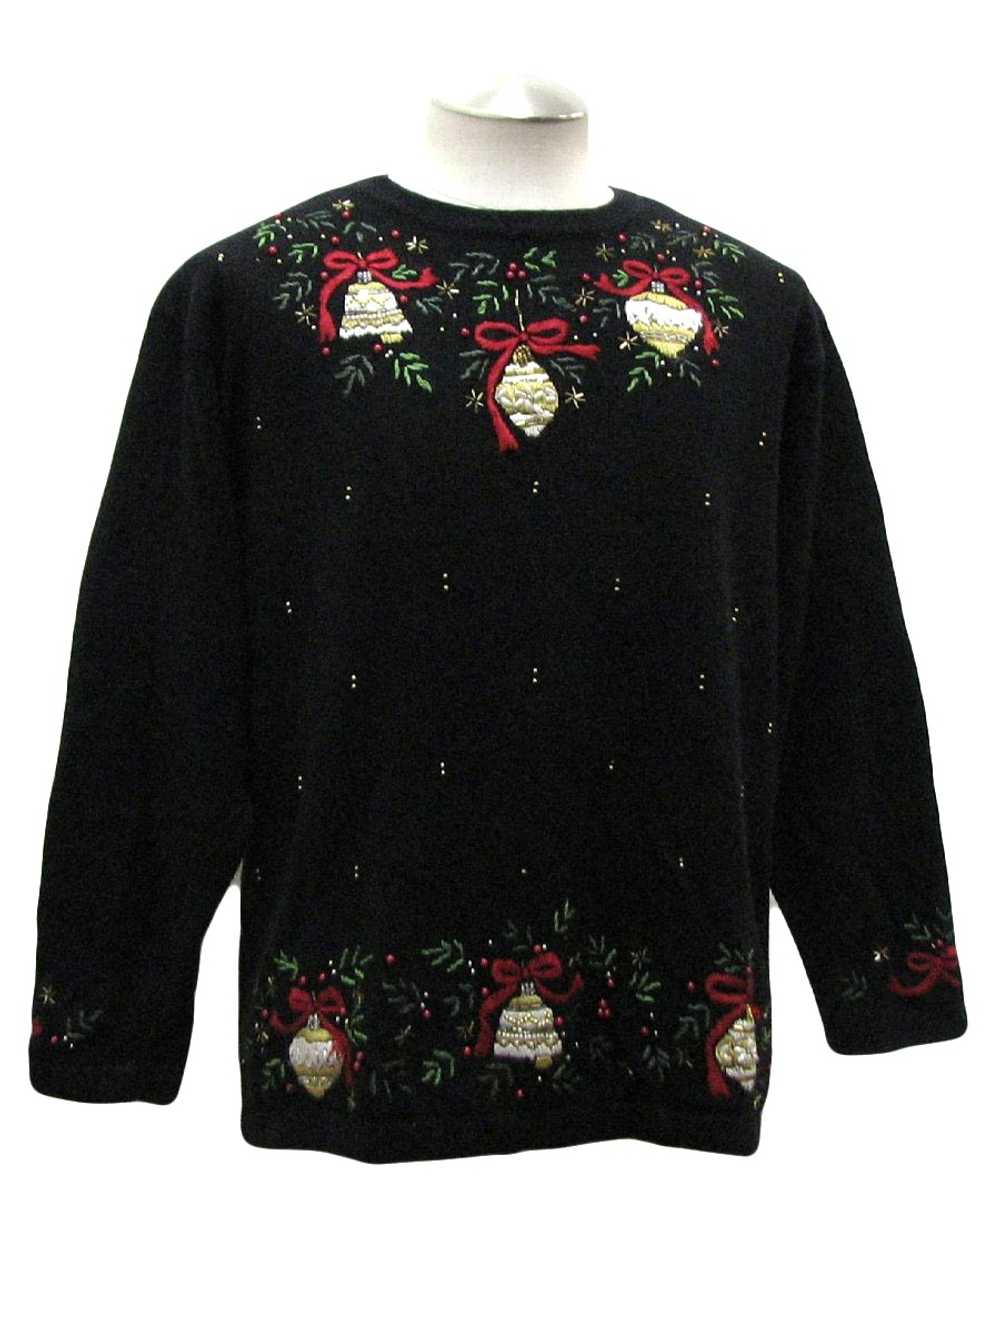 Victoria Jones Unisex Ugly Christmas Sweater - image 1